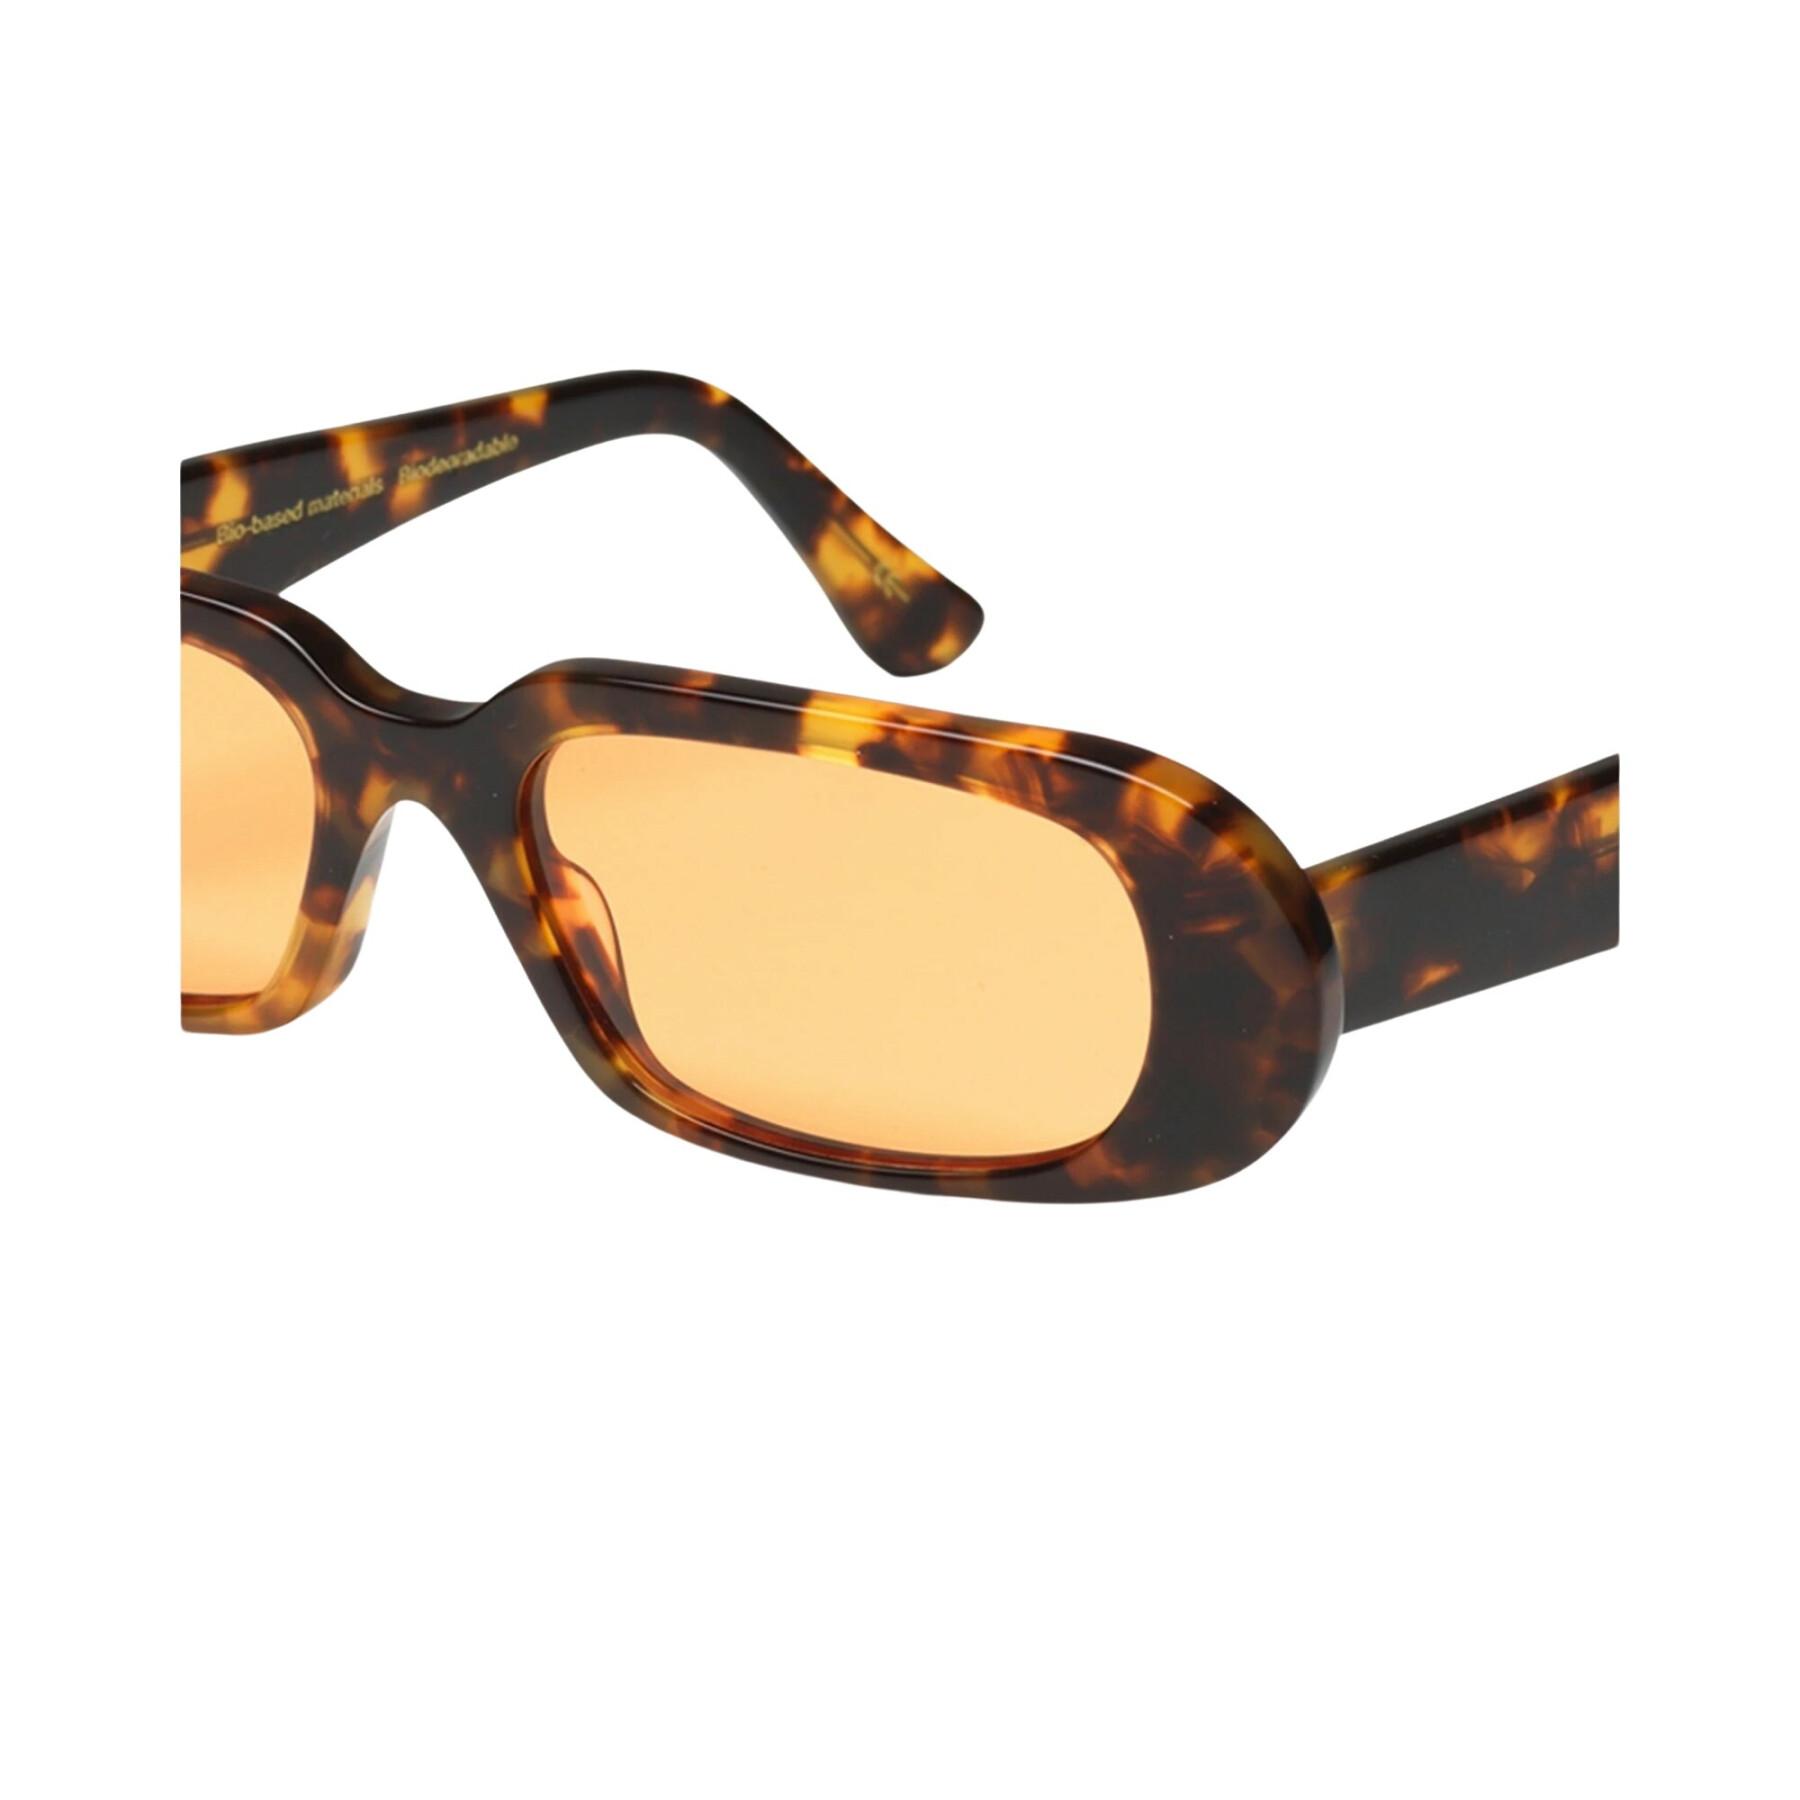 Sunglasses Colorful Standard 09 classic havana/orange